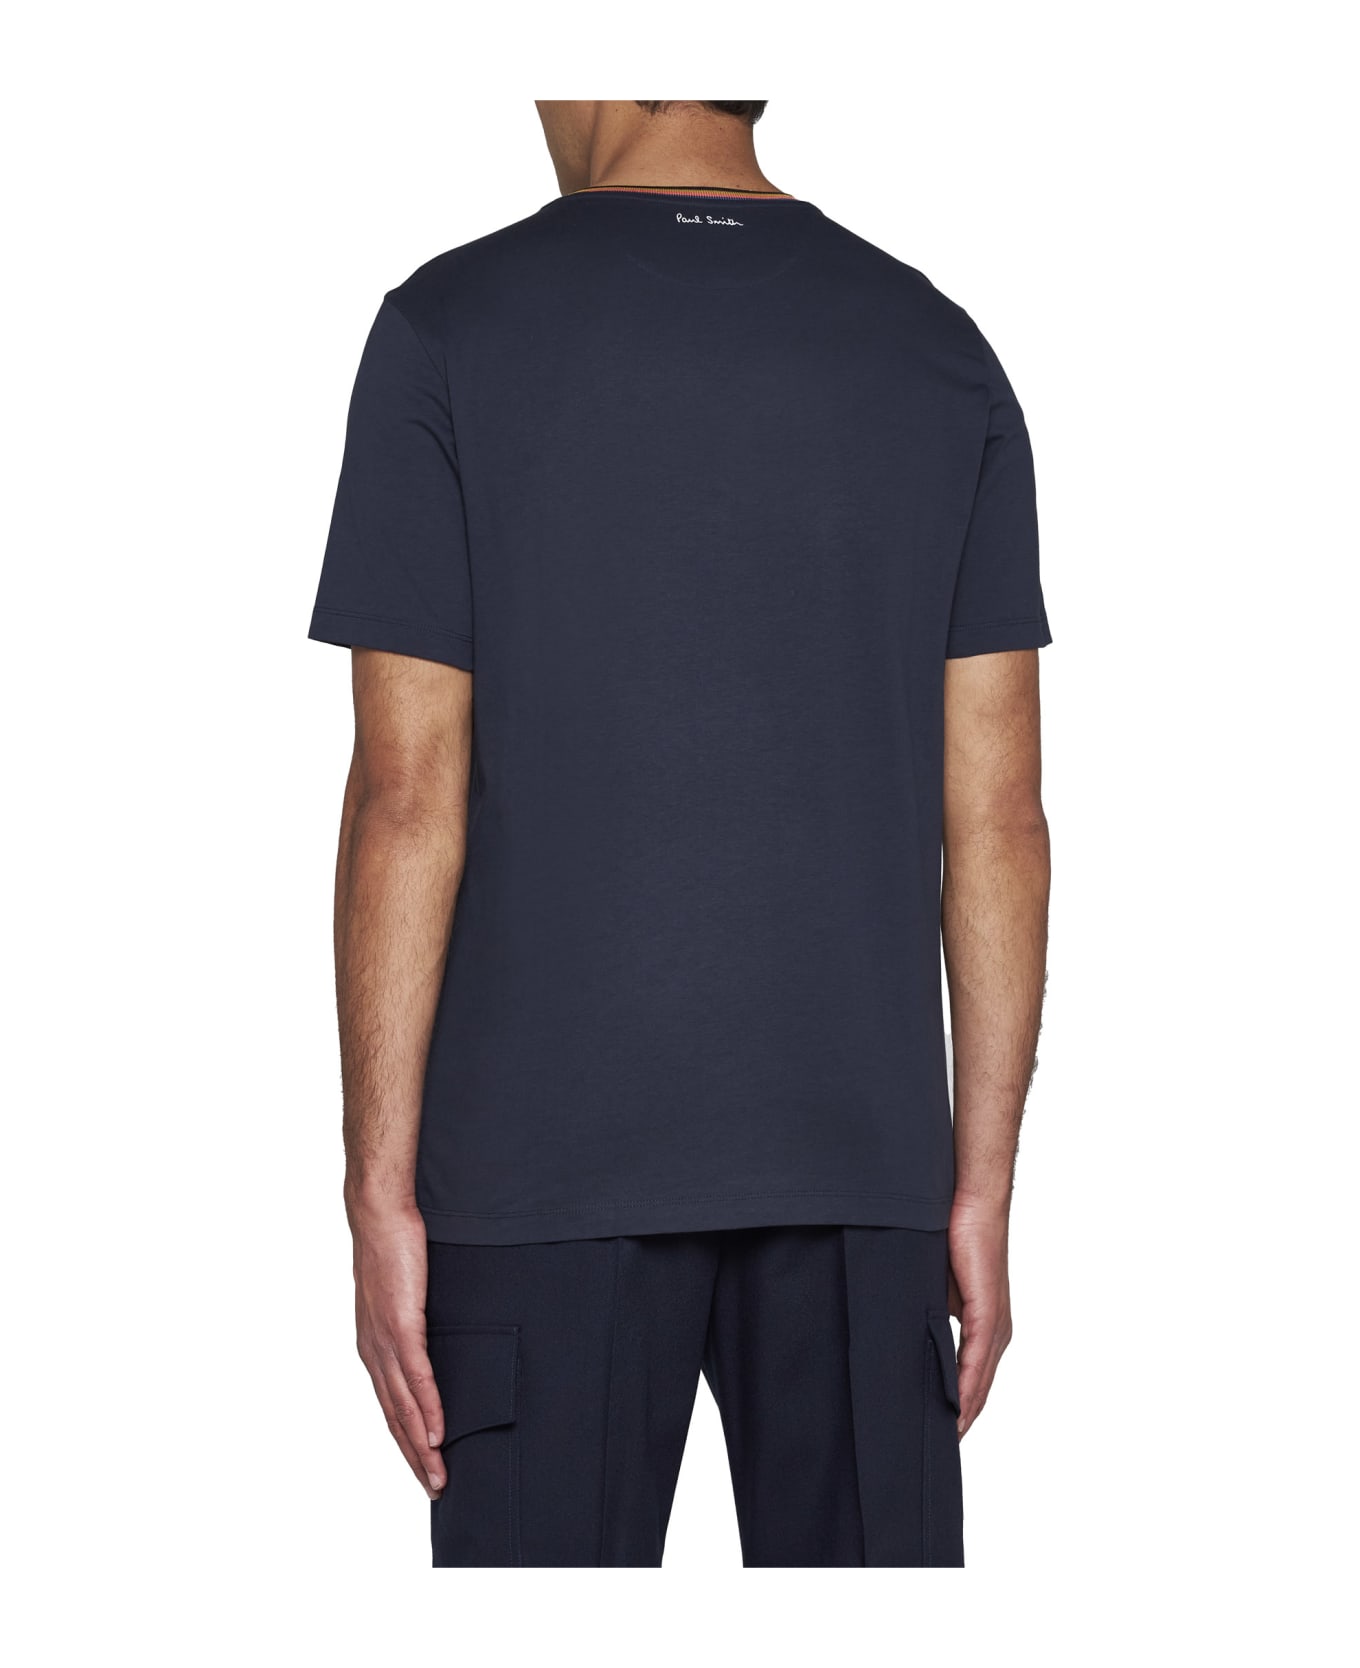 Paul Smith T-Shirt - VERY DARK NAVY シャツ